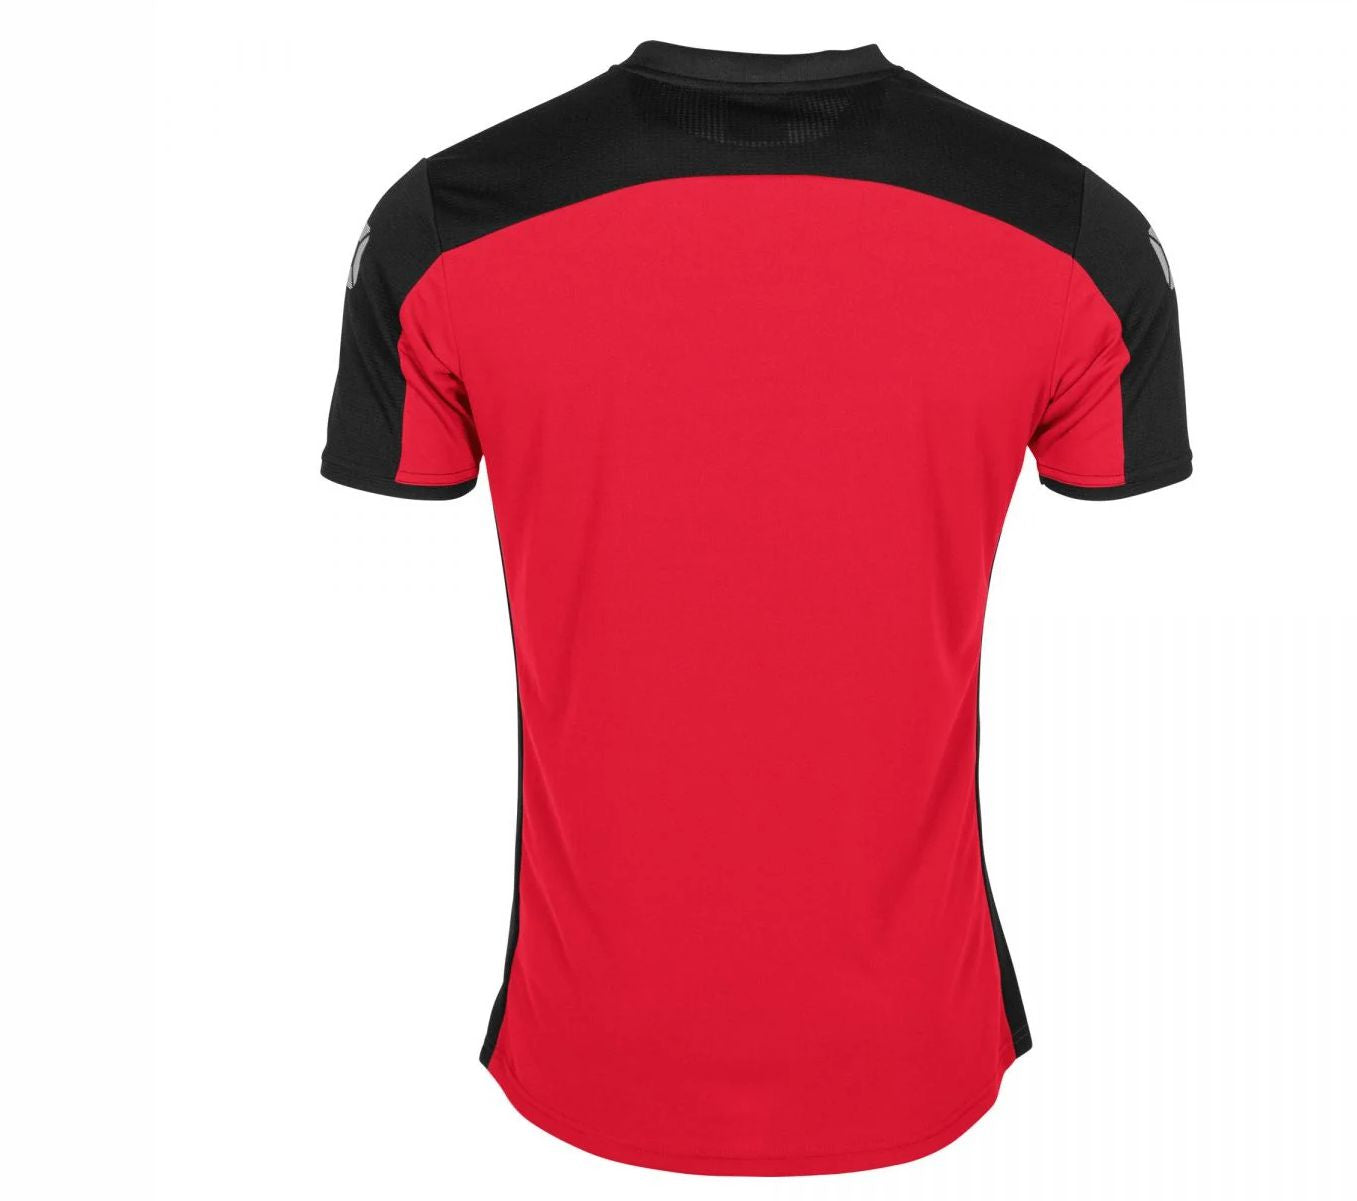 Stanno - Pride Shirt - Red & Black